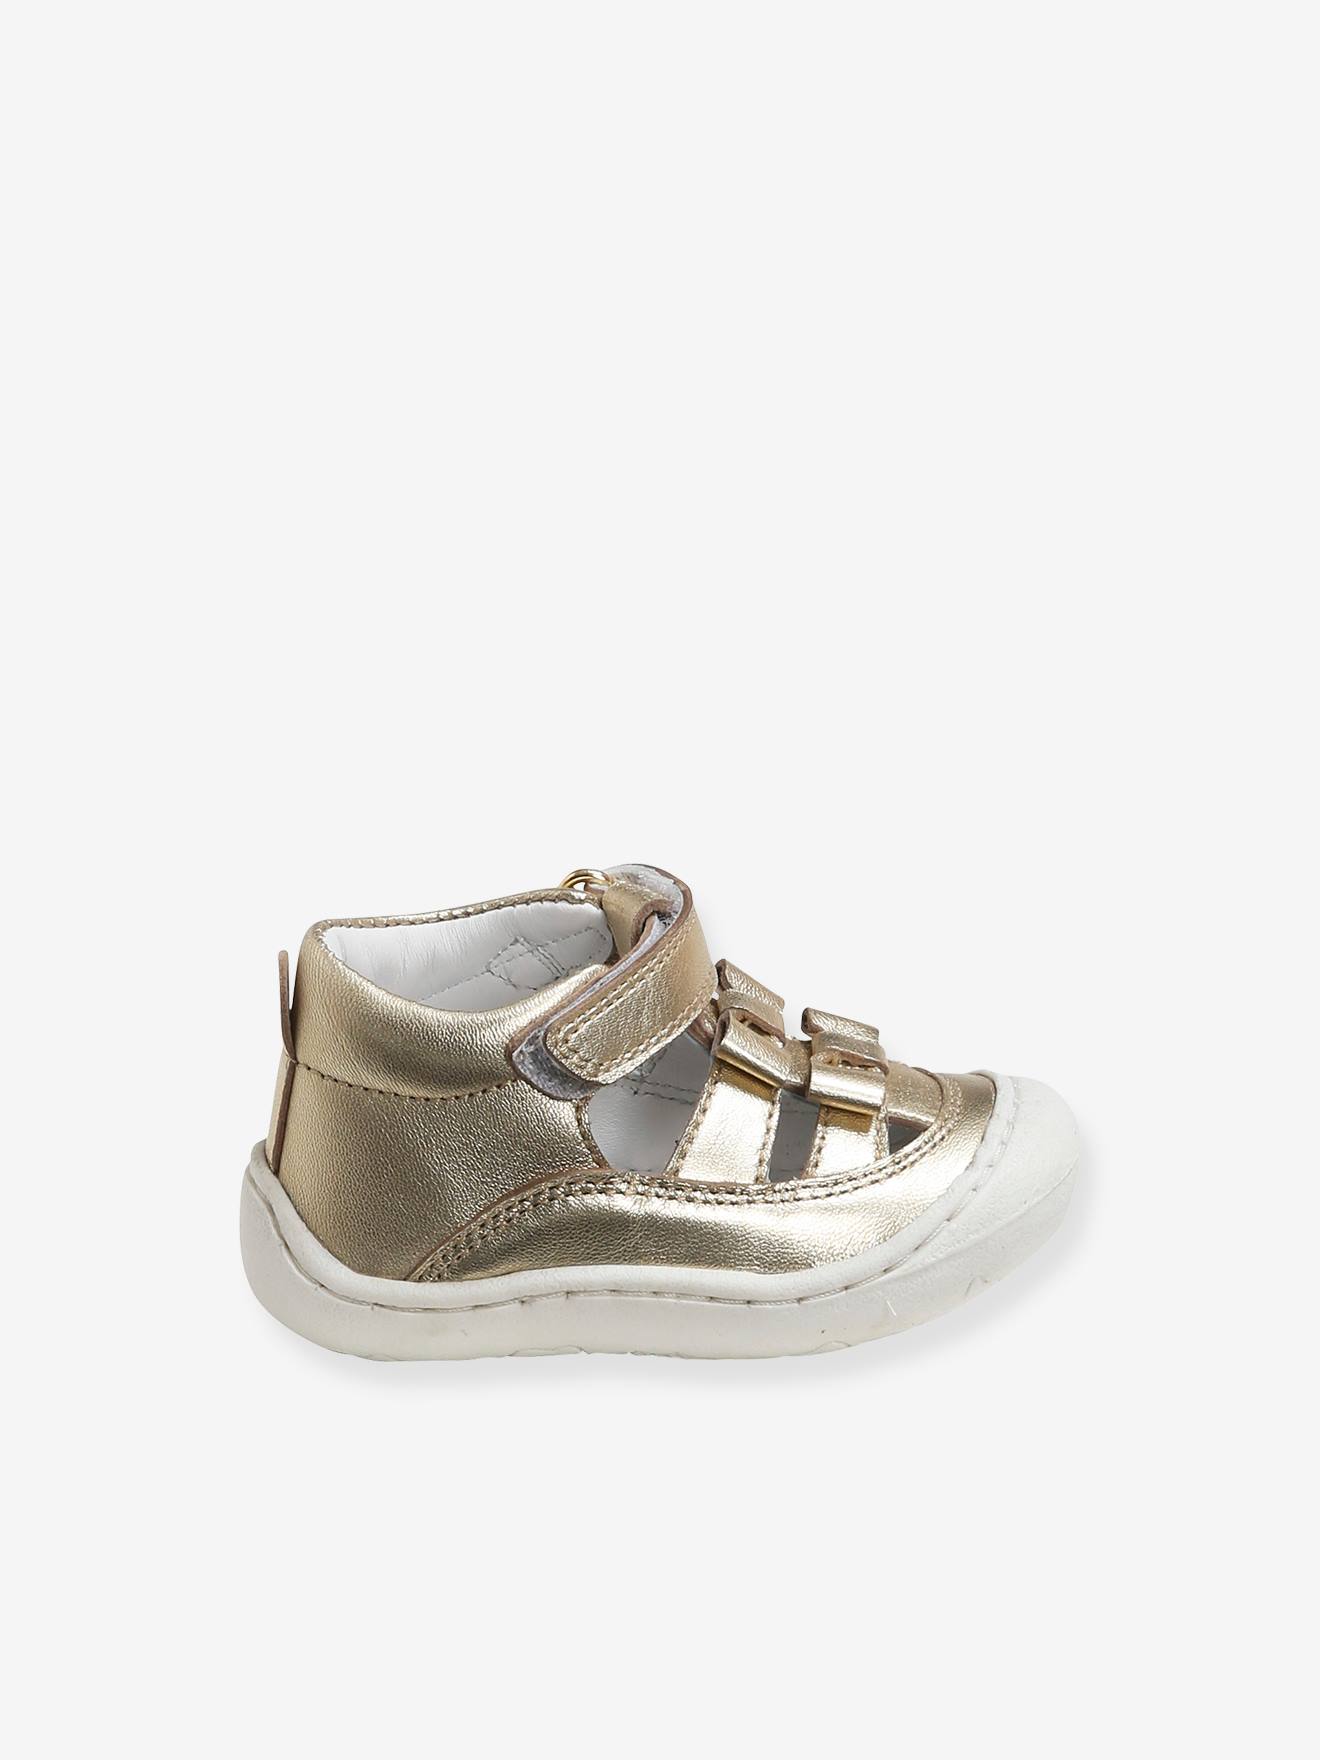 Sandales Cuir Souple Bebe Fille 4 Pattes Metallise Or Chaussures